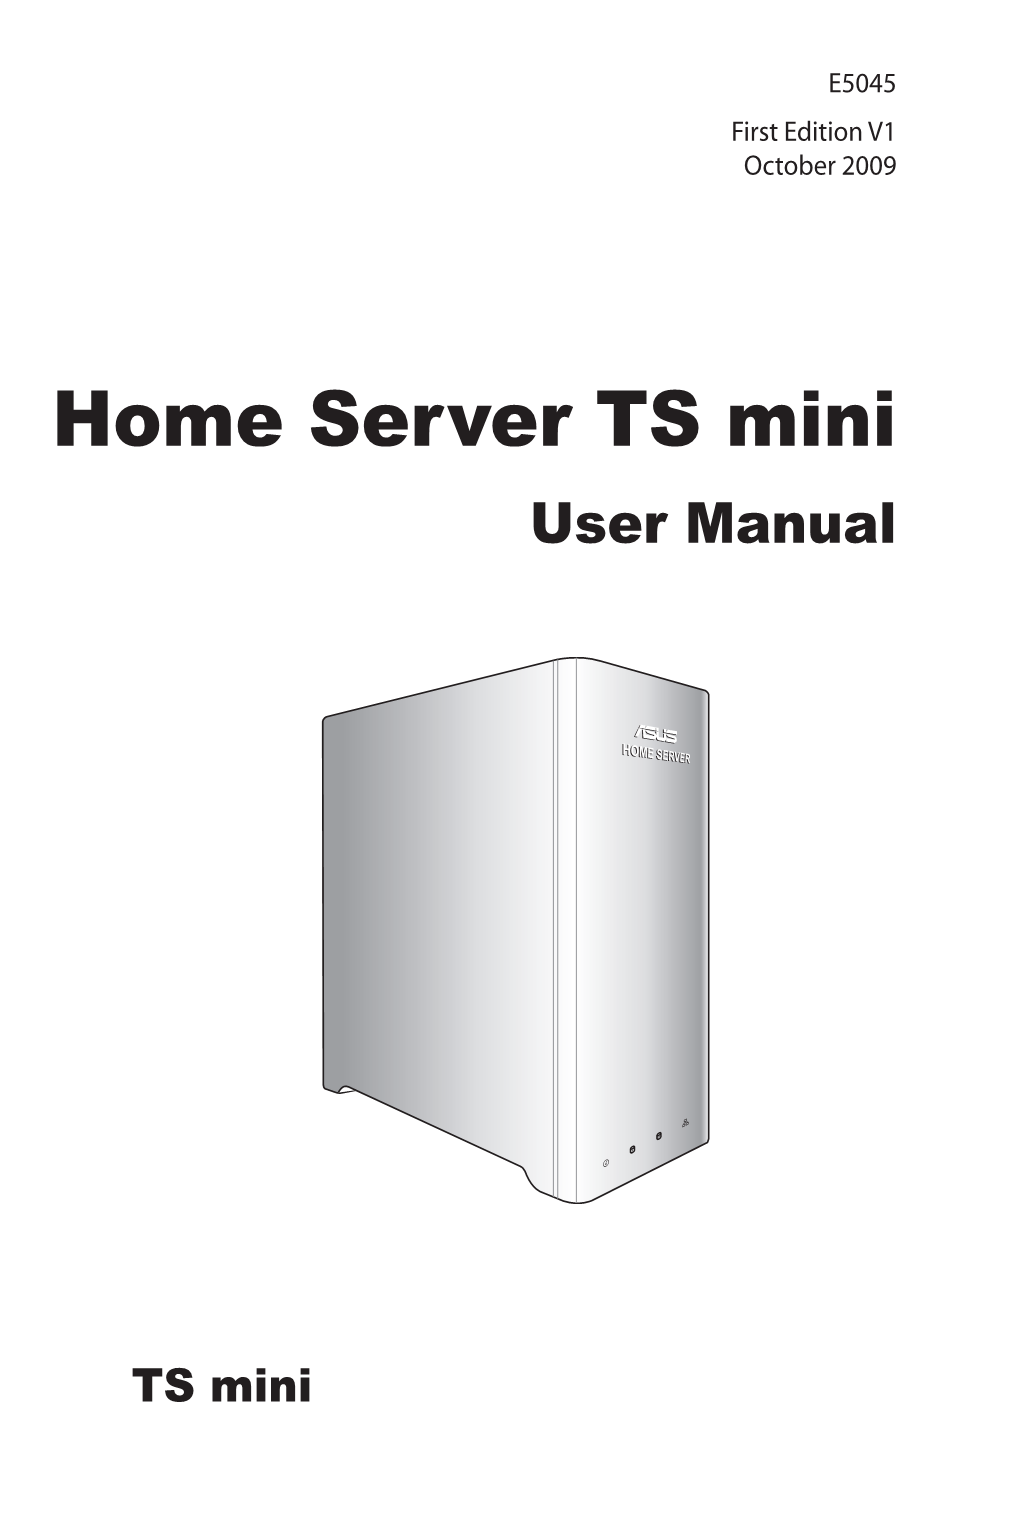 Home Server TS Mini User Manual